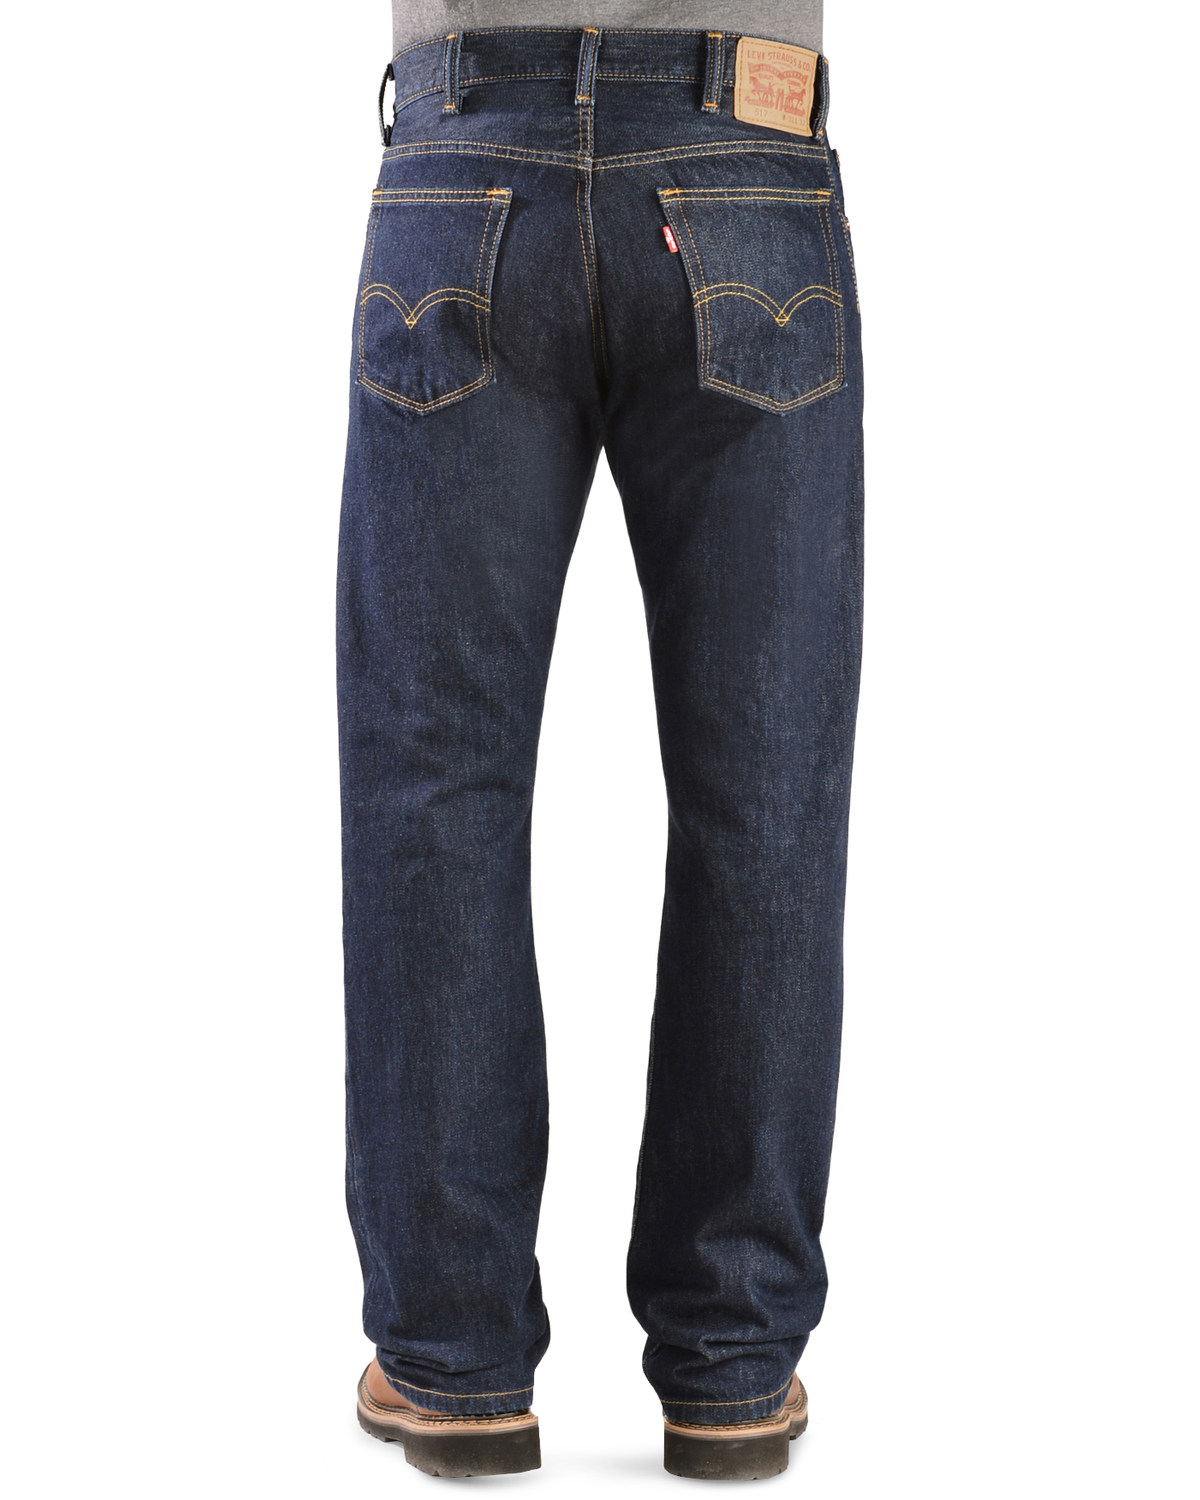 Buy > jeans levis 517 > in stock